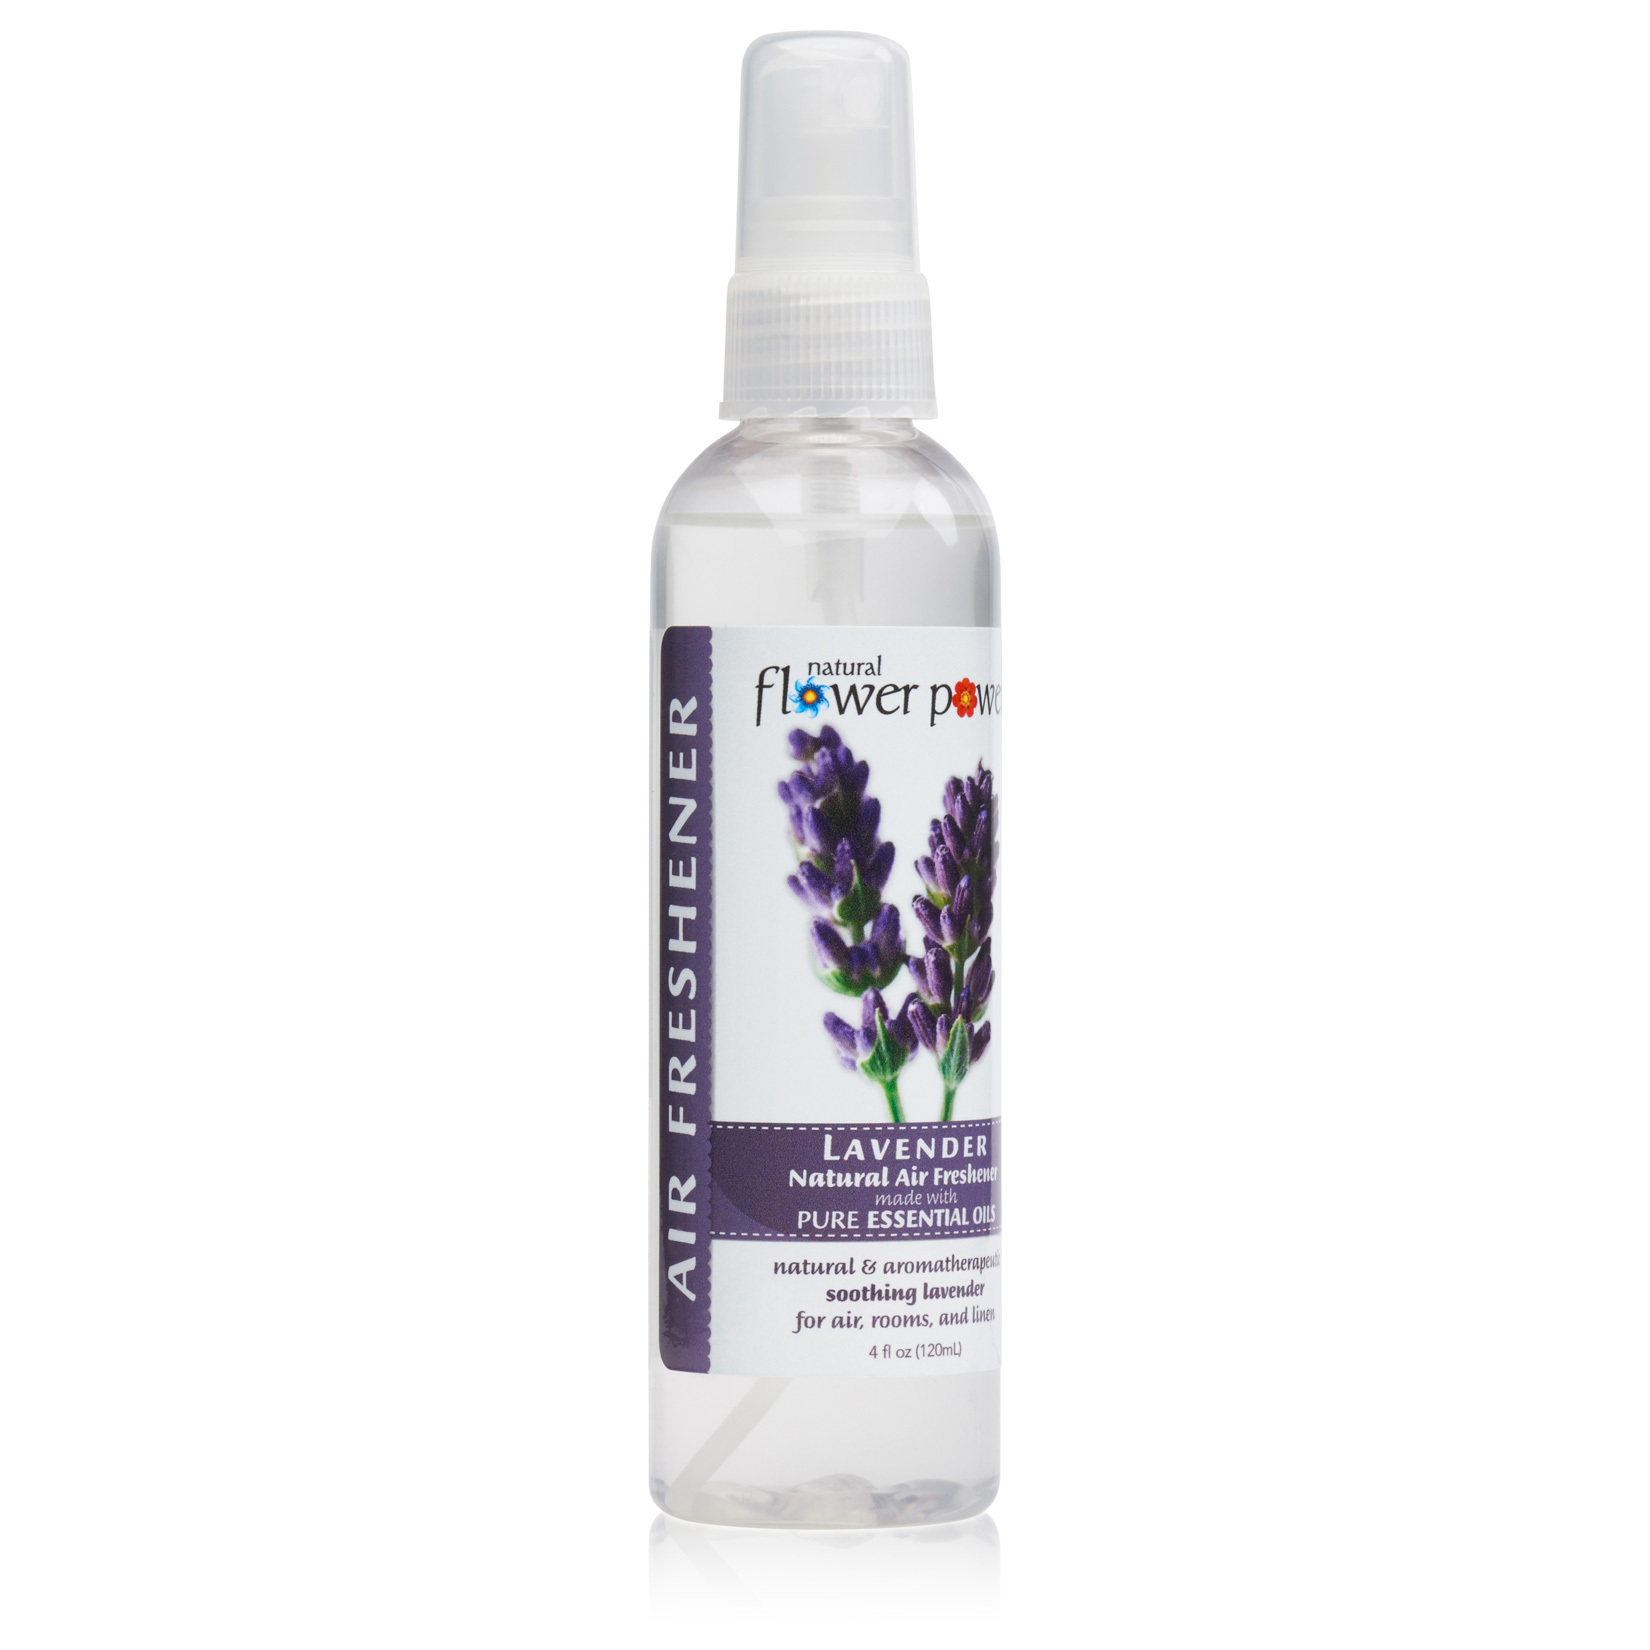 Natural Flower Power Air Freshener Spray, Lavender 4 Fl Oz, Pack of 3, Scented w/ Pure Essential Oils, Non-Aerosol Plant-Based Odor Eliminator, Room, Linen, or Car Spray